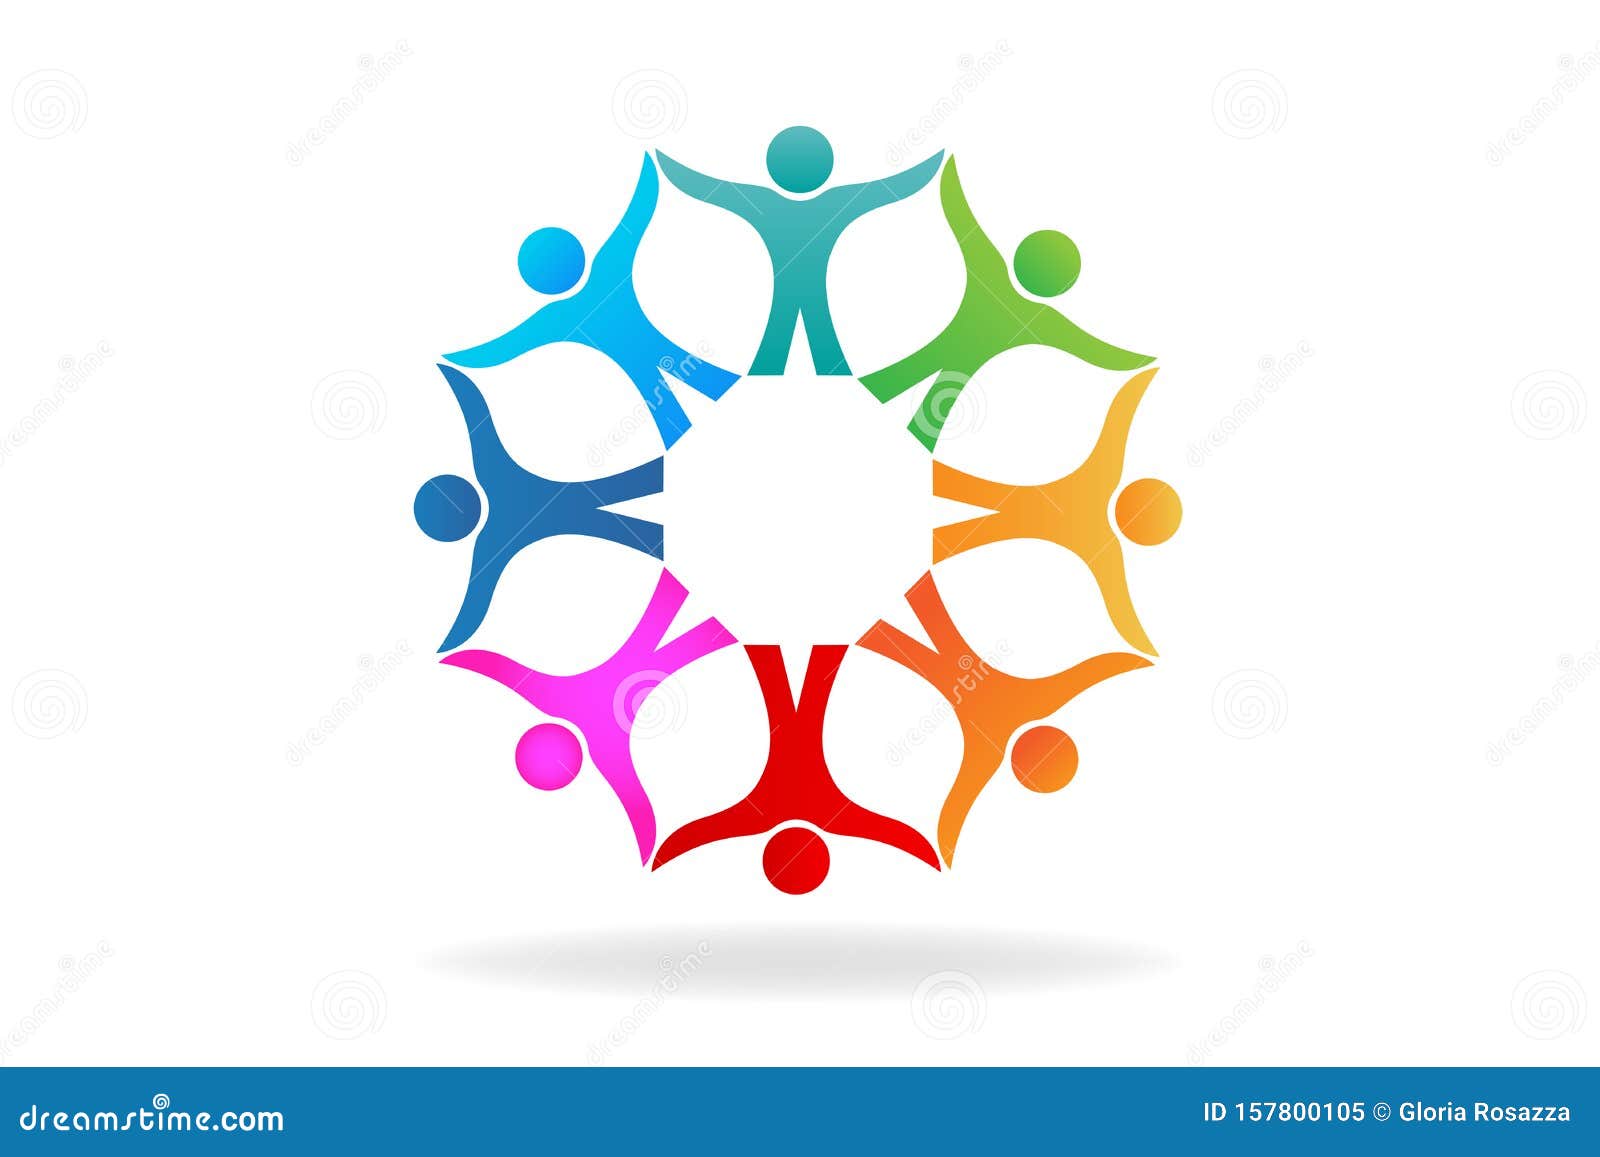 logo teamwork people holding hands unity friendship community flower  id card business logos icon  